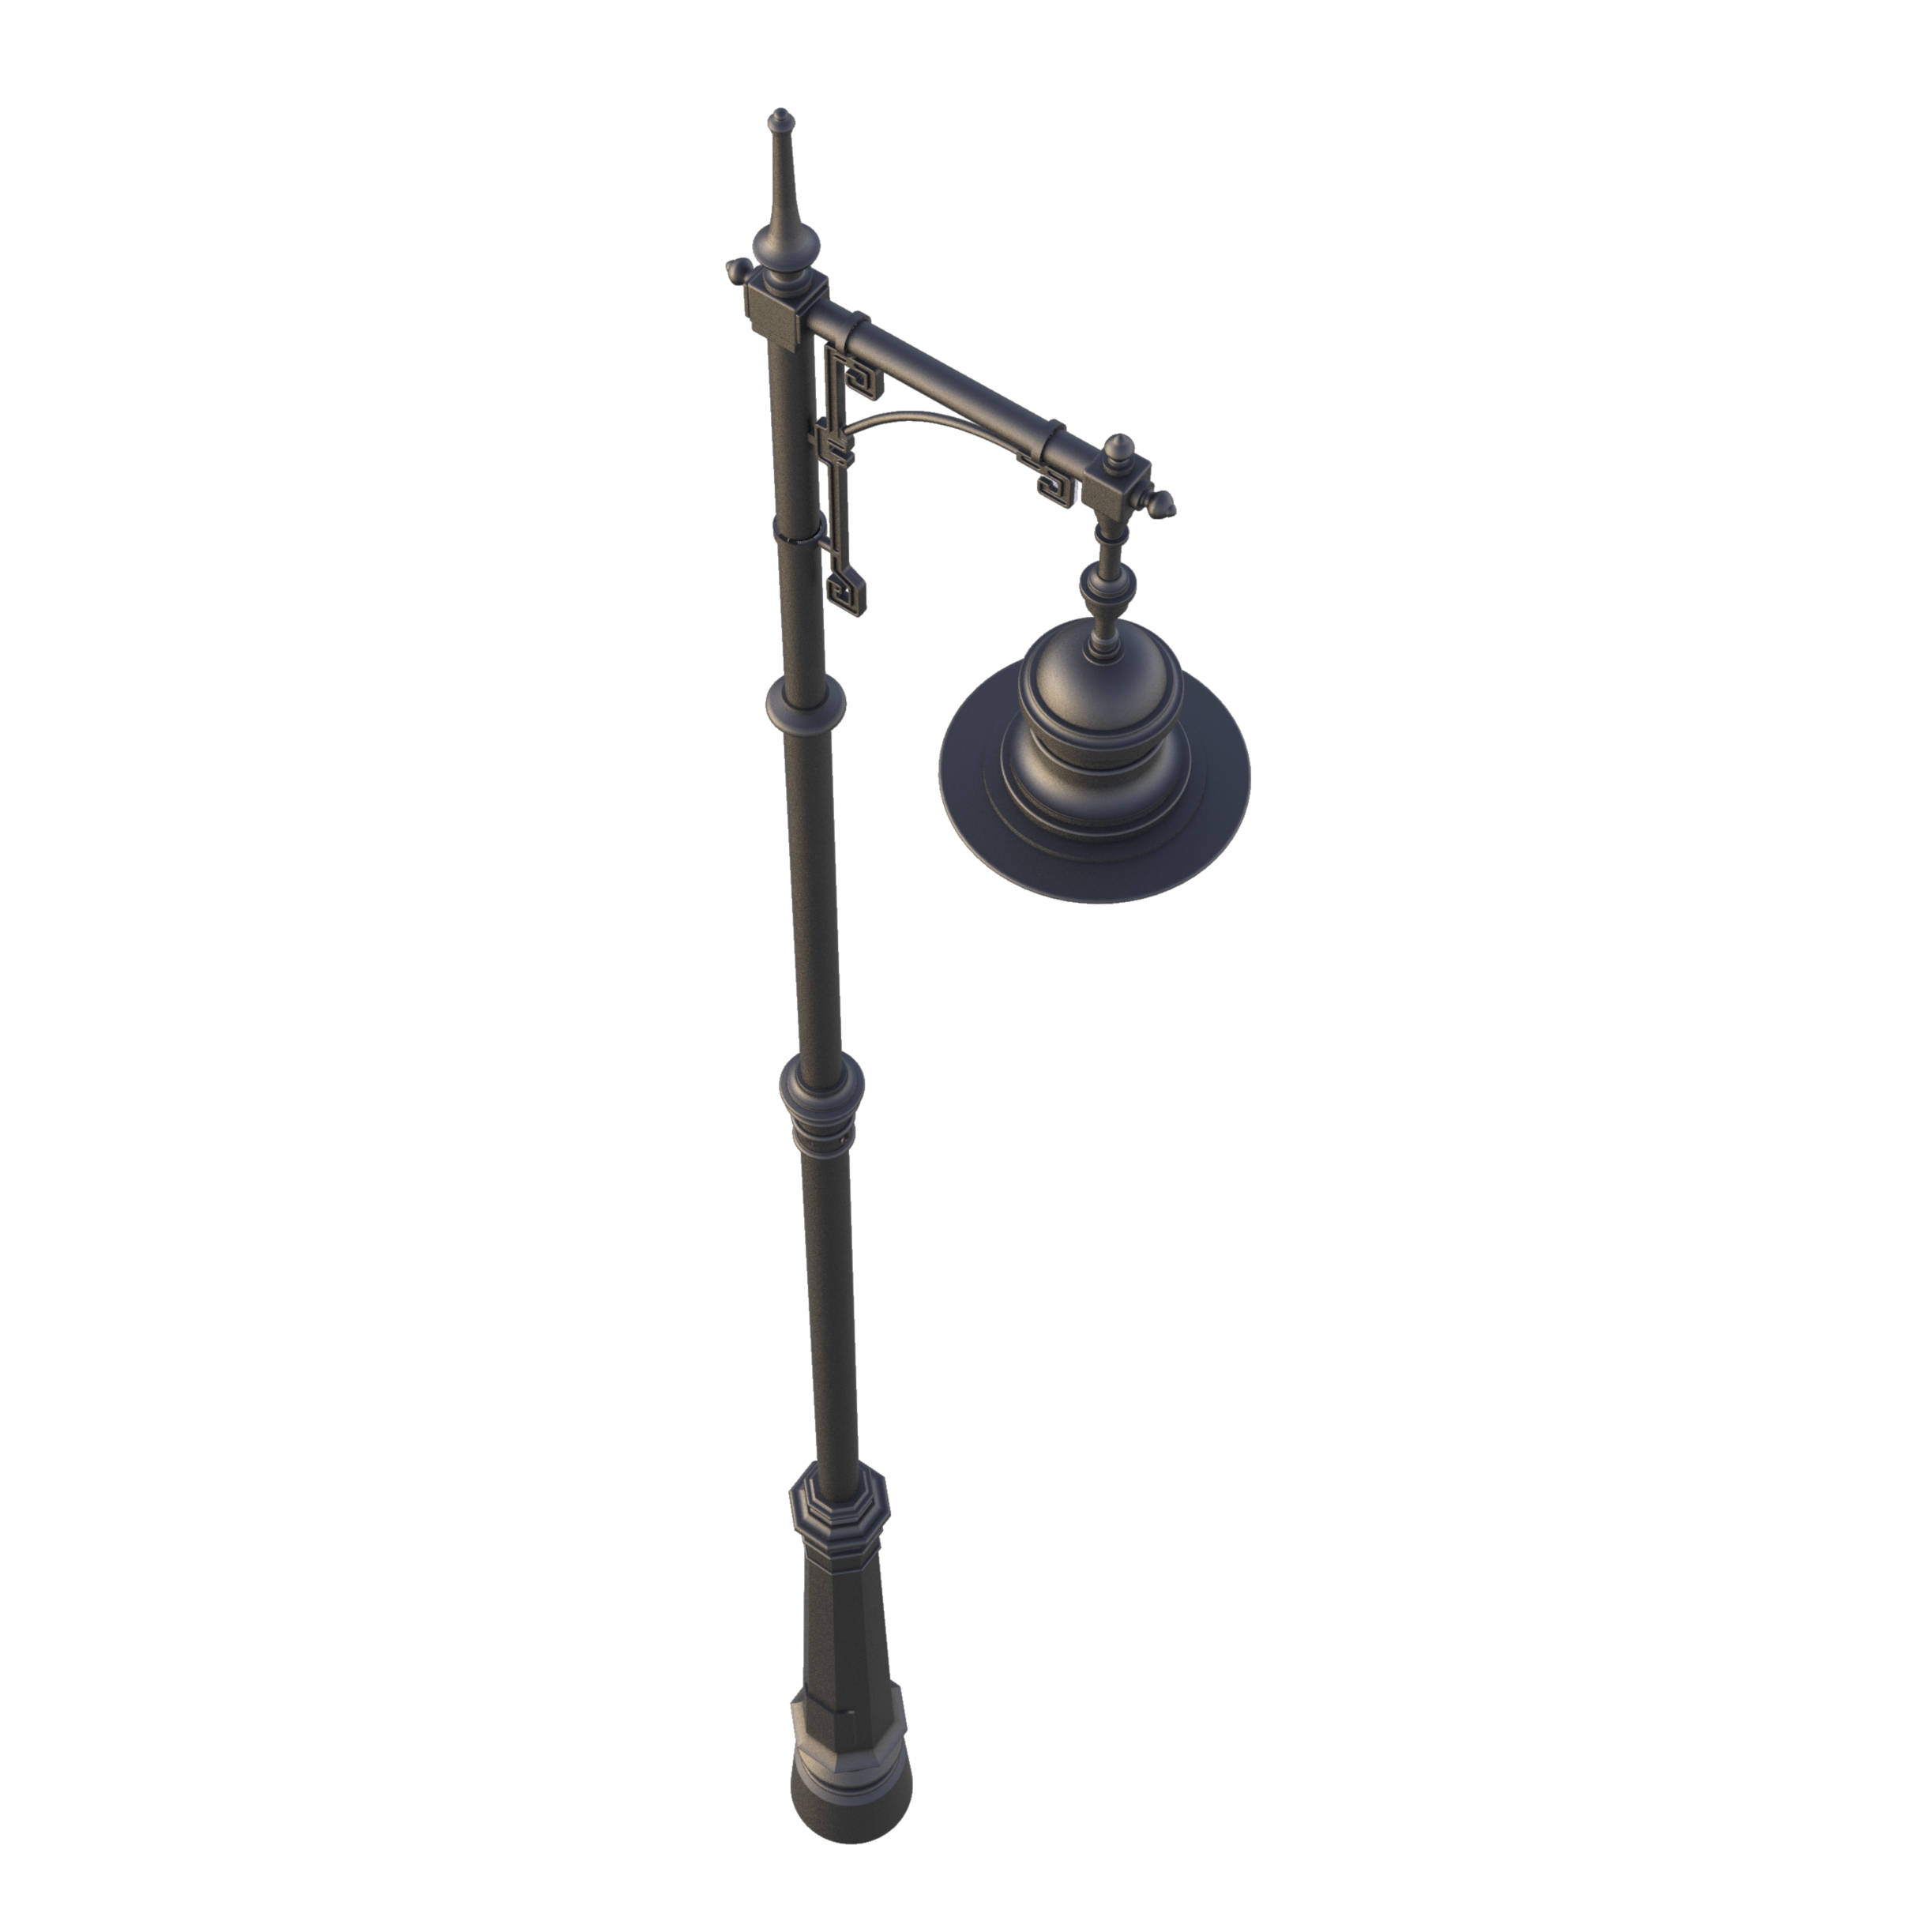 HERITAGEGLOW Classic Artistic cast iron lamp pole